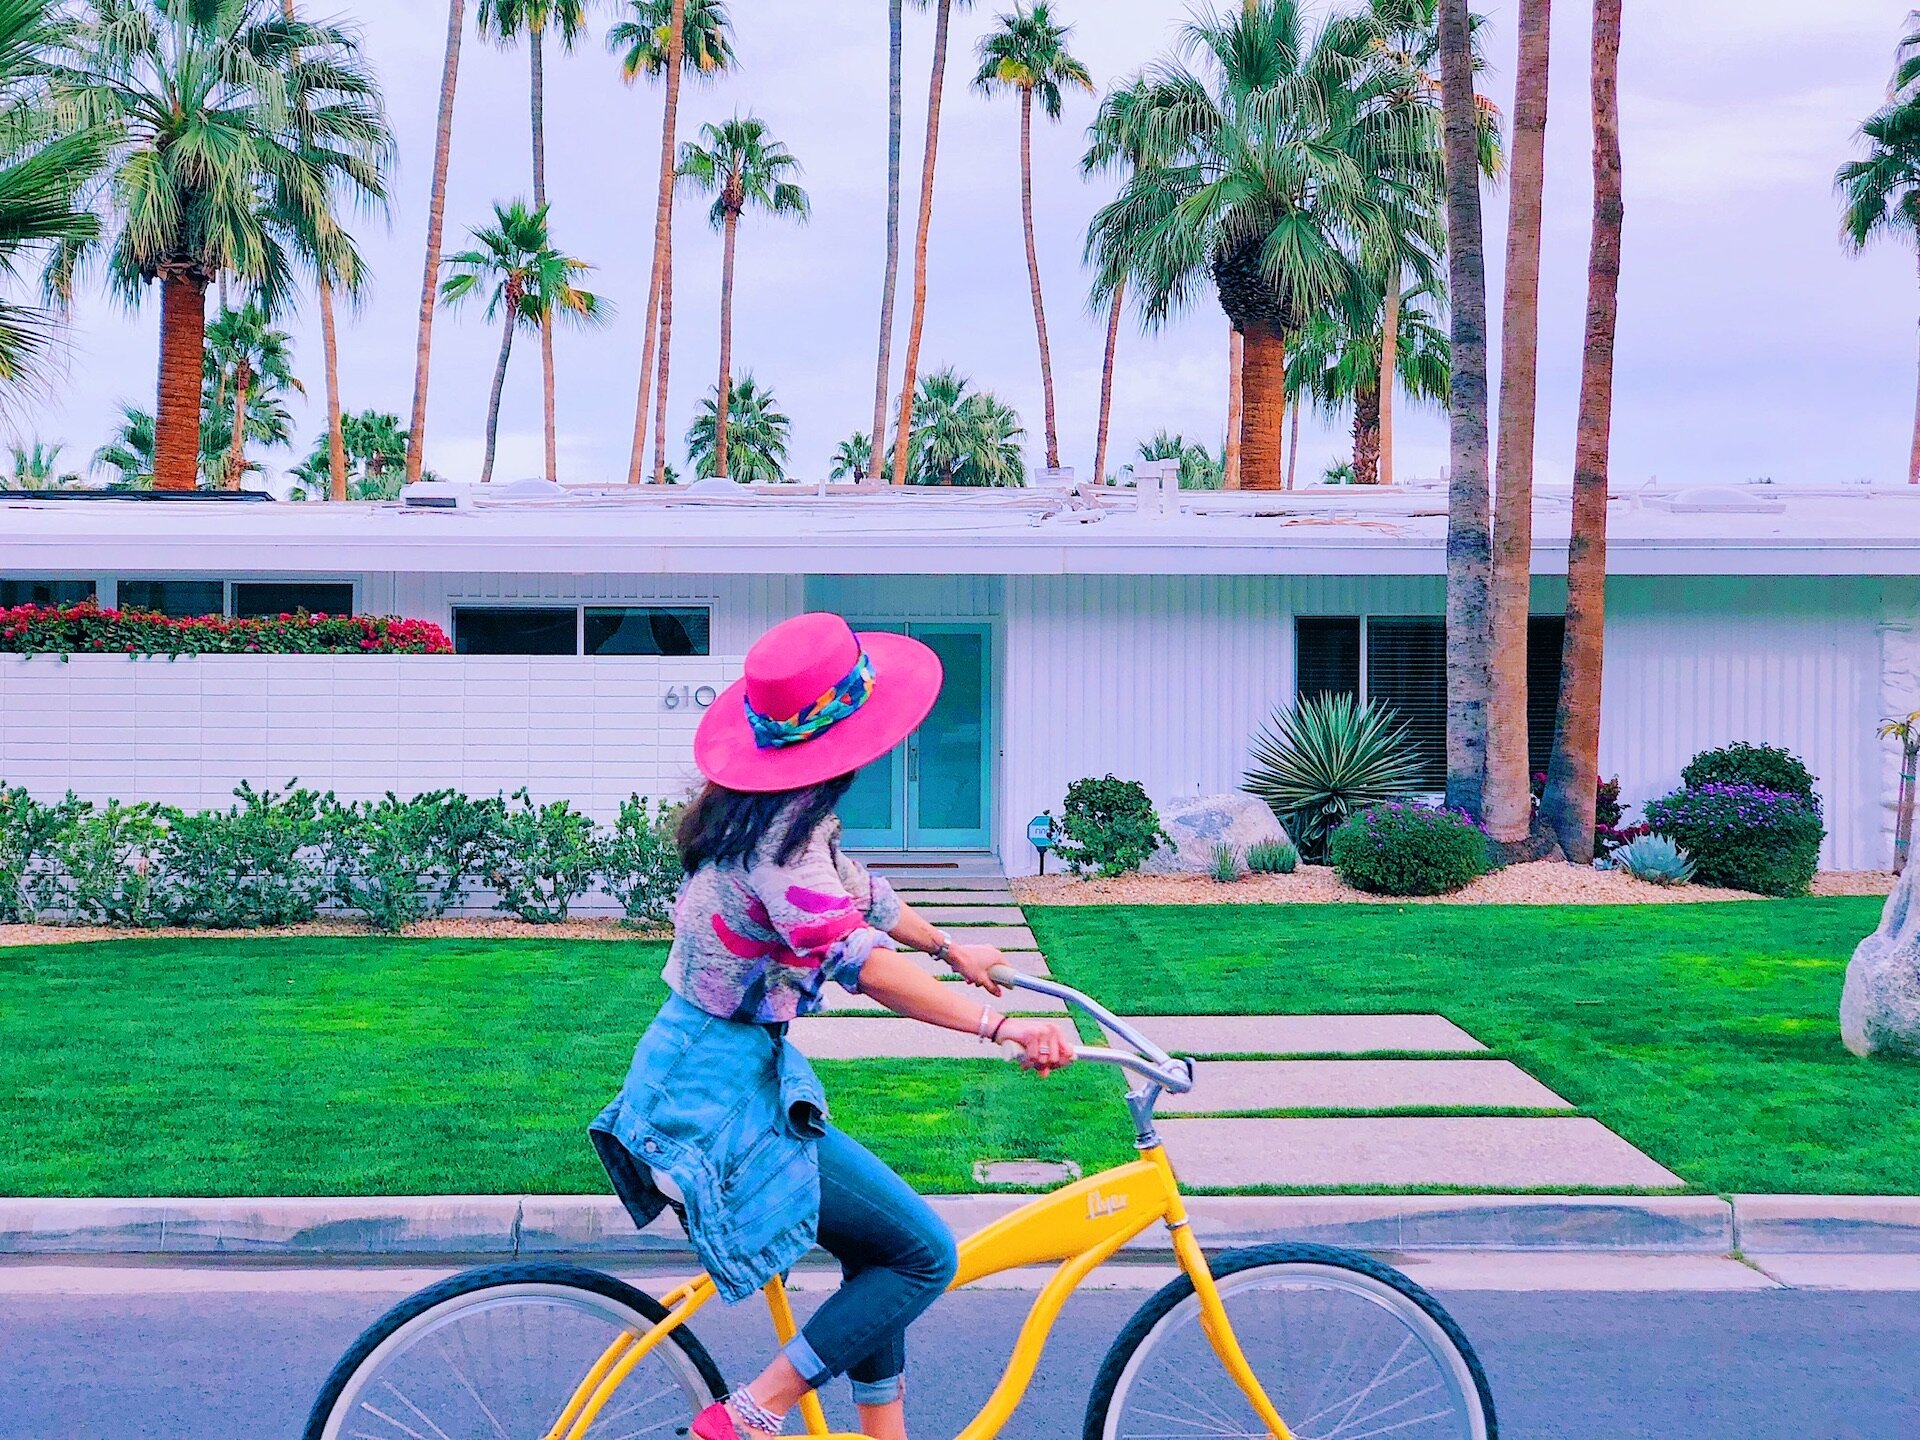 bike-tour-palm-springs-superbloom-pink-fashion-hat.JPG